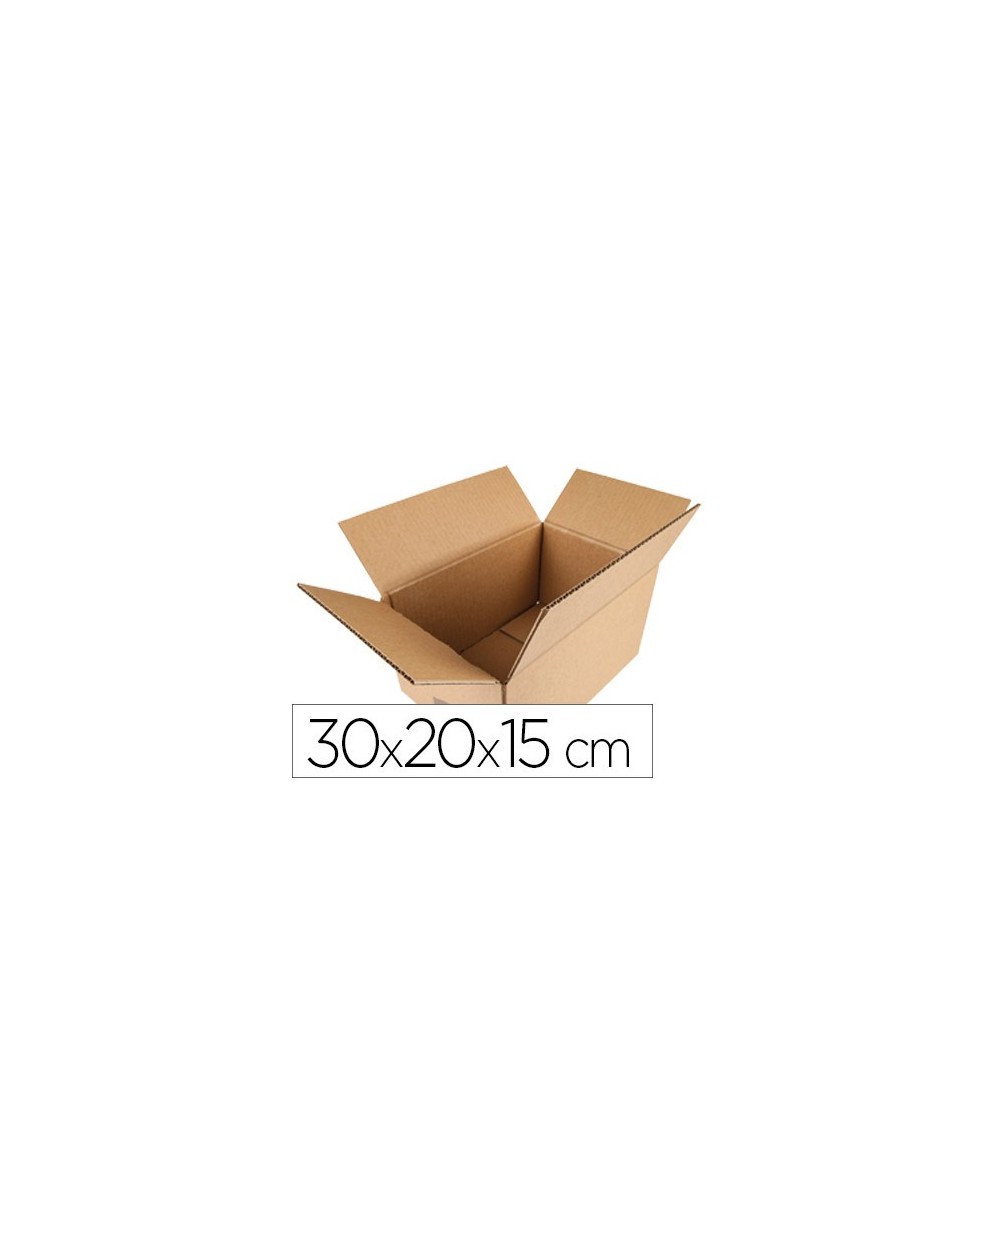 Caja para embalar q connect americana medidas 300x200x150 mm espesor carton 5 mm